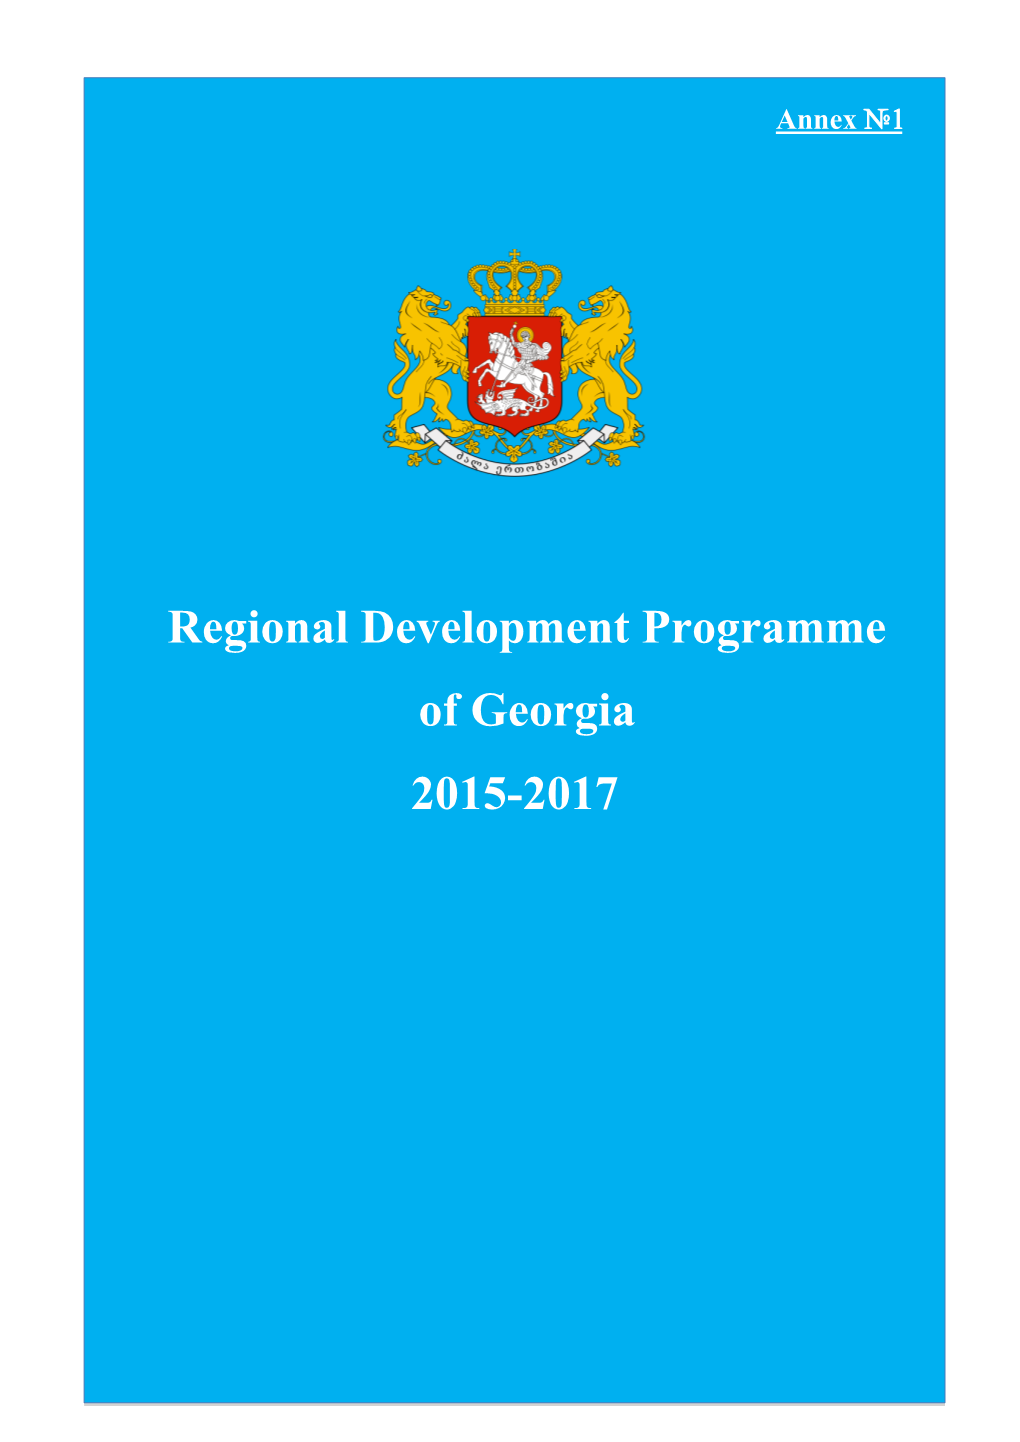 Regional Development Programme of Georgia 2015-2017